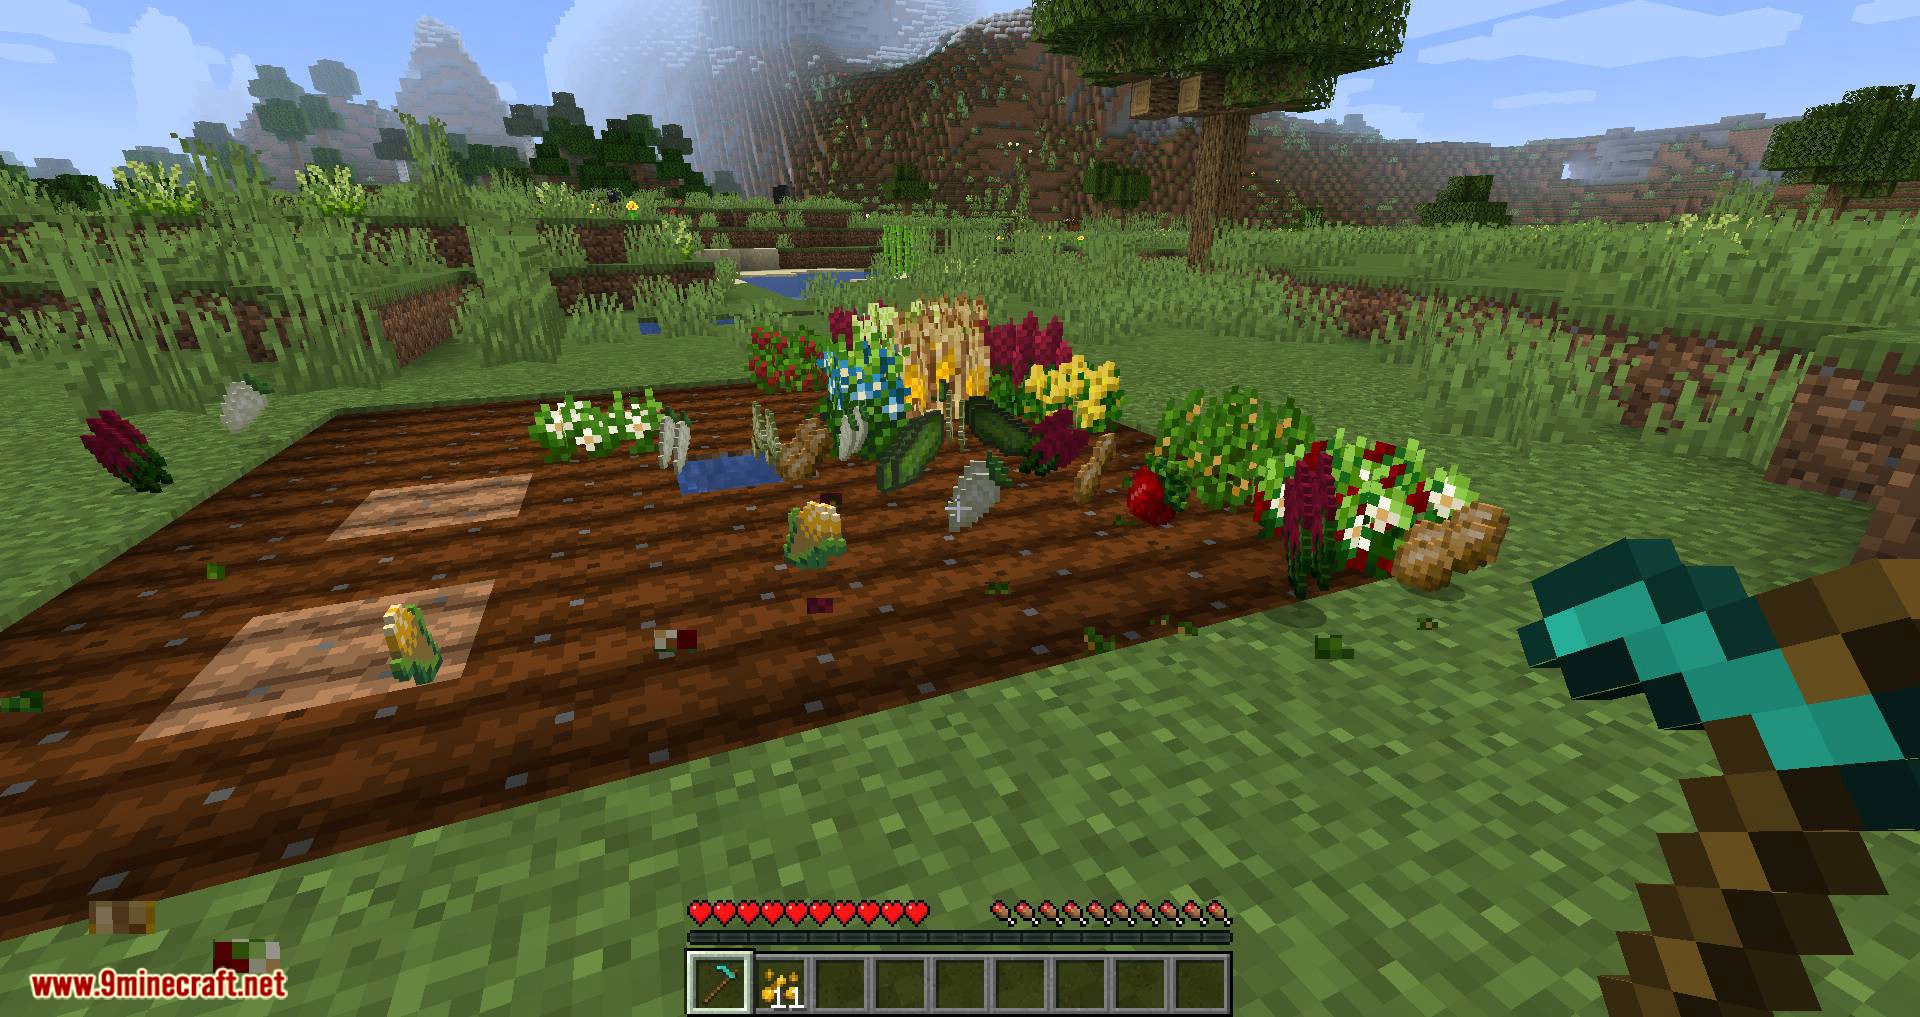 Pam_s HarvestCraft 2 – Crops mod for minecraft 07